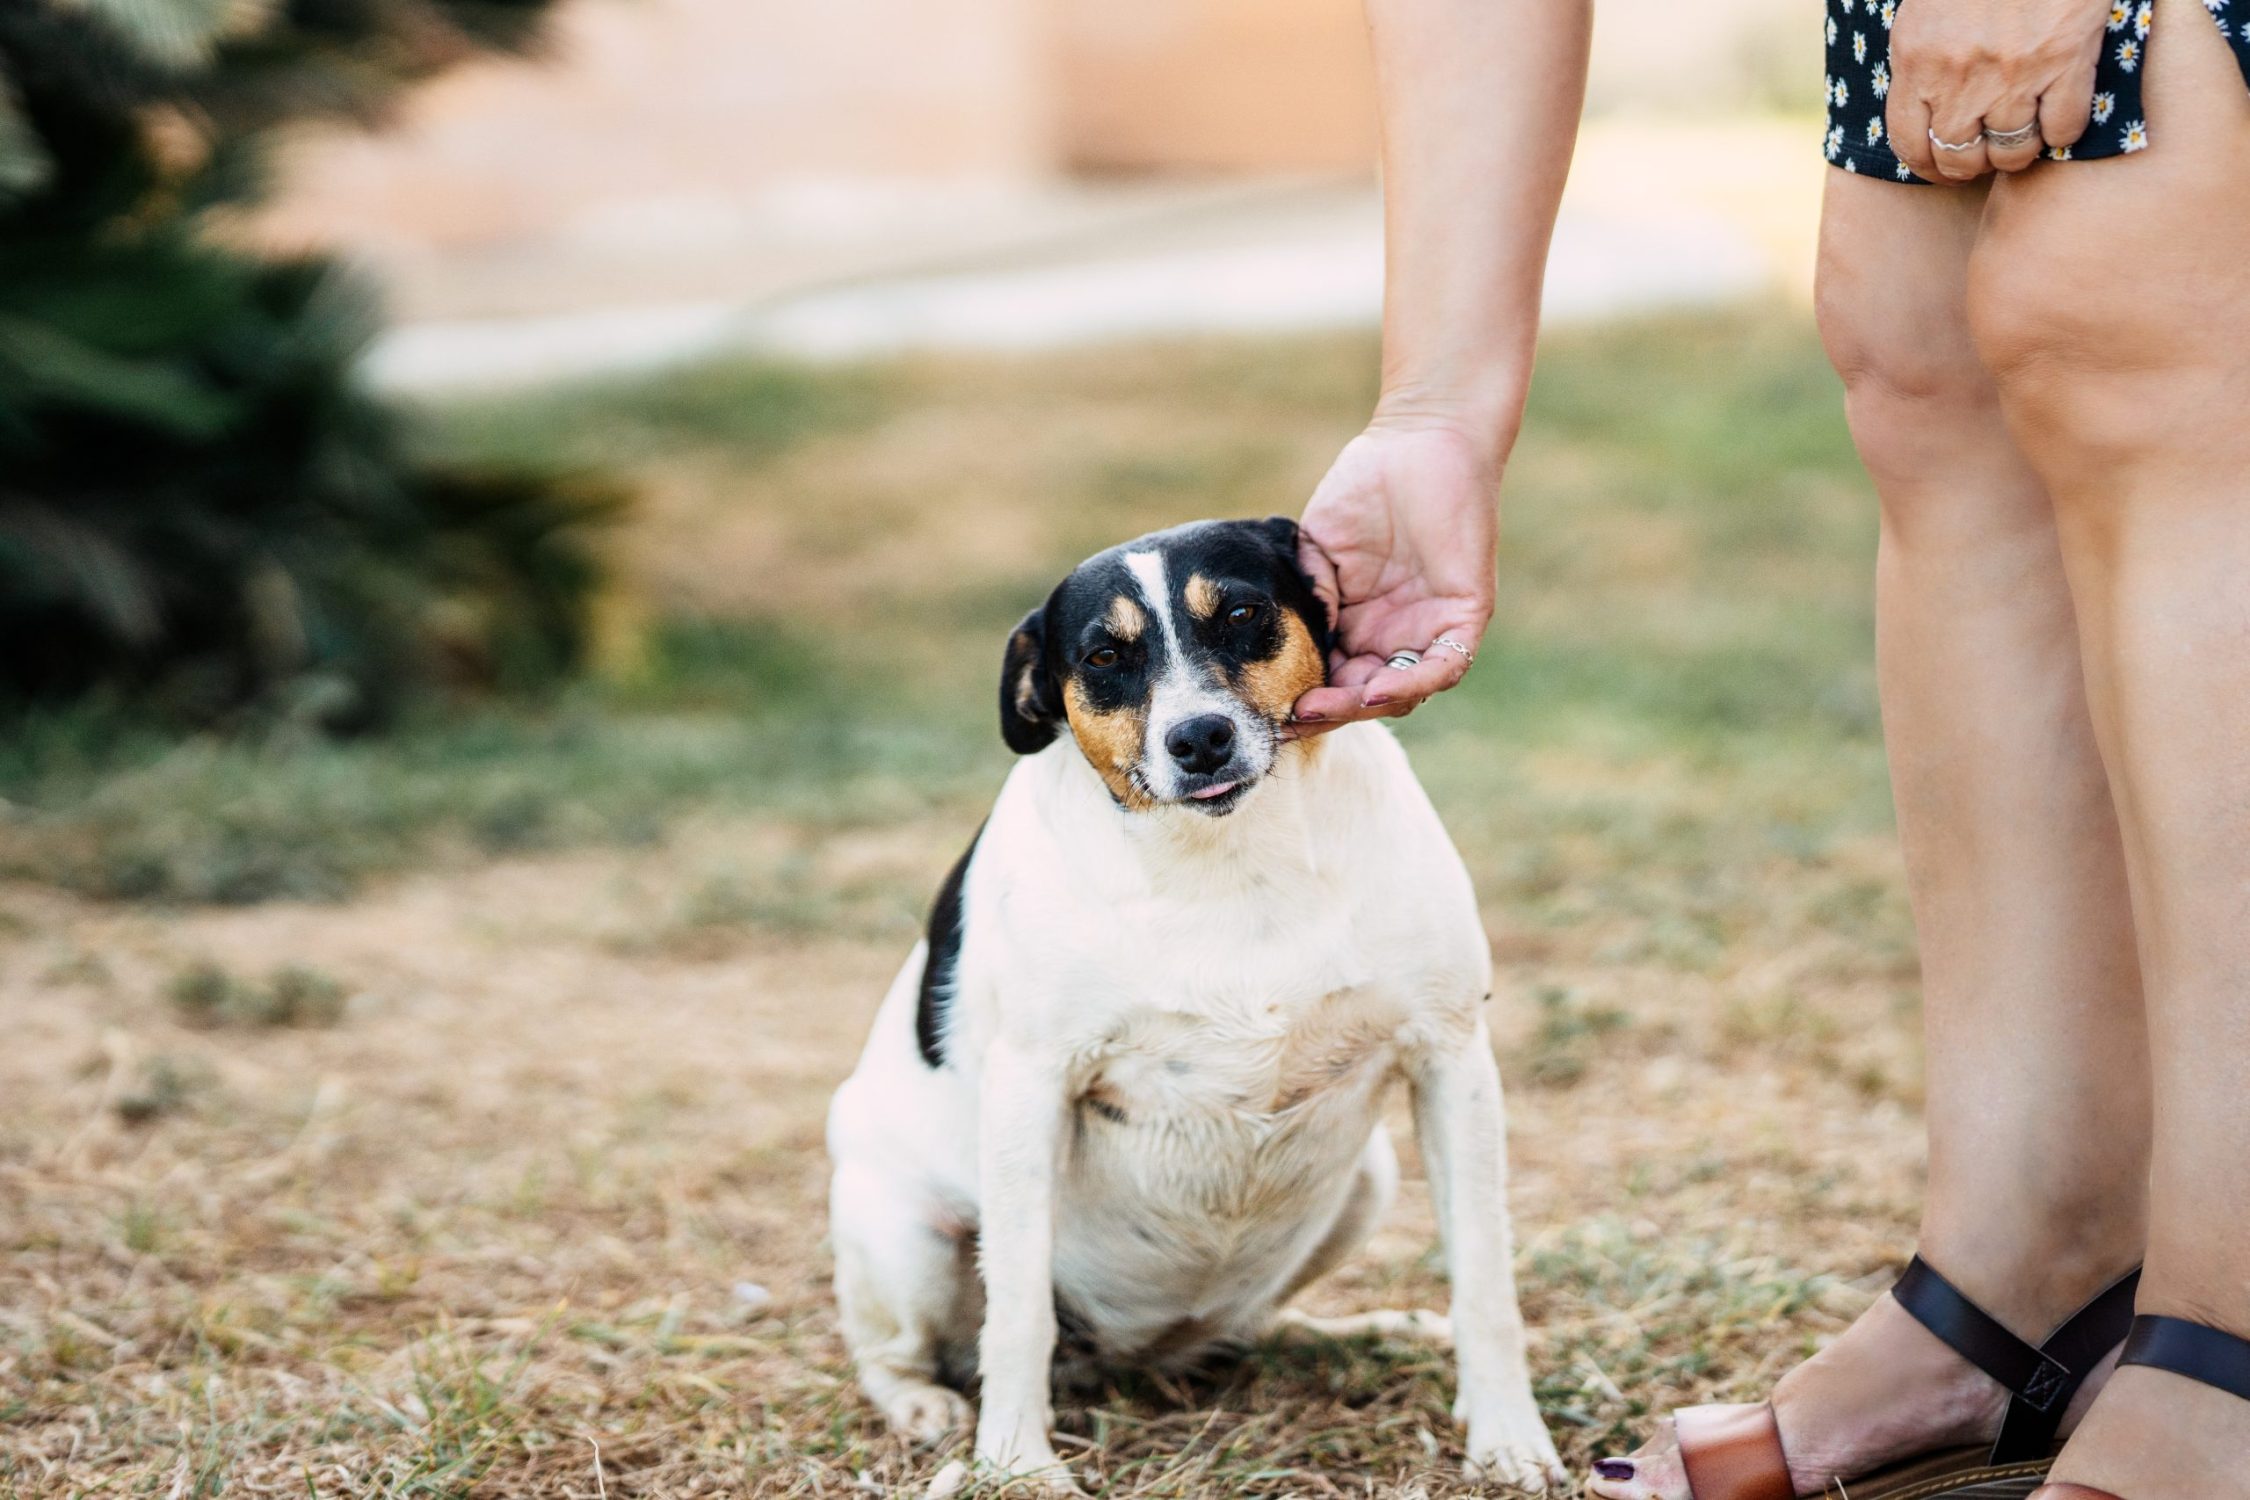 paralysis ticks in Brisbane - dog and owner in the garden